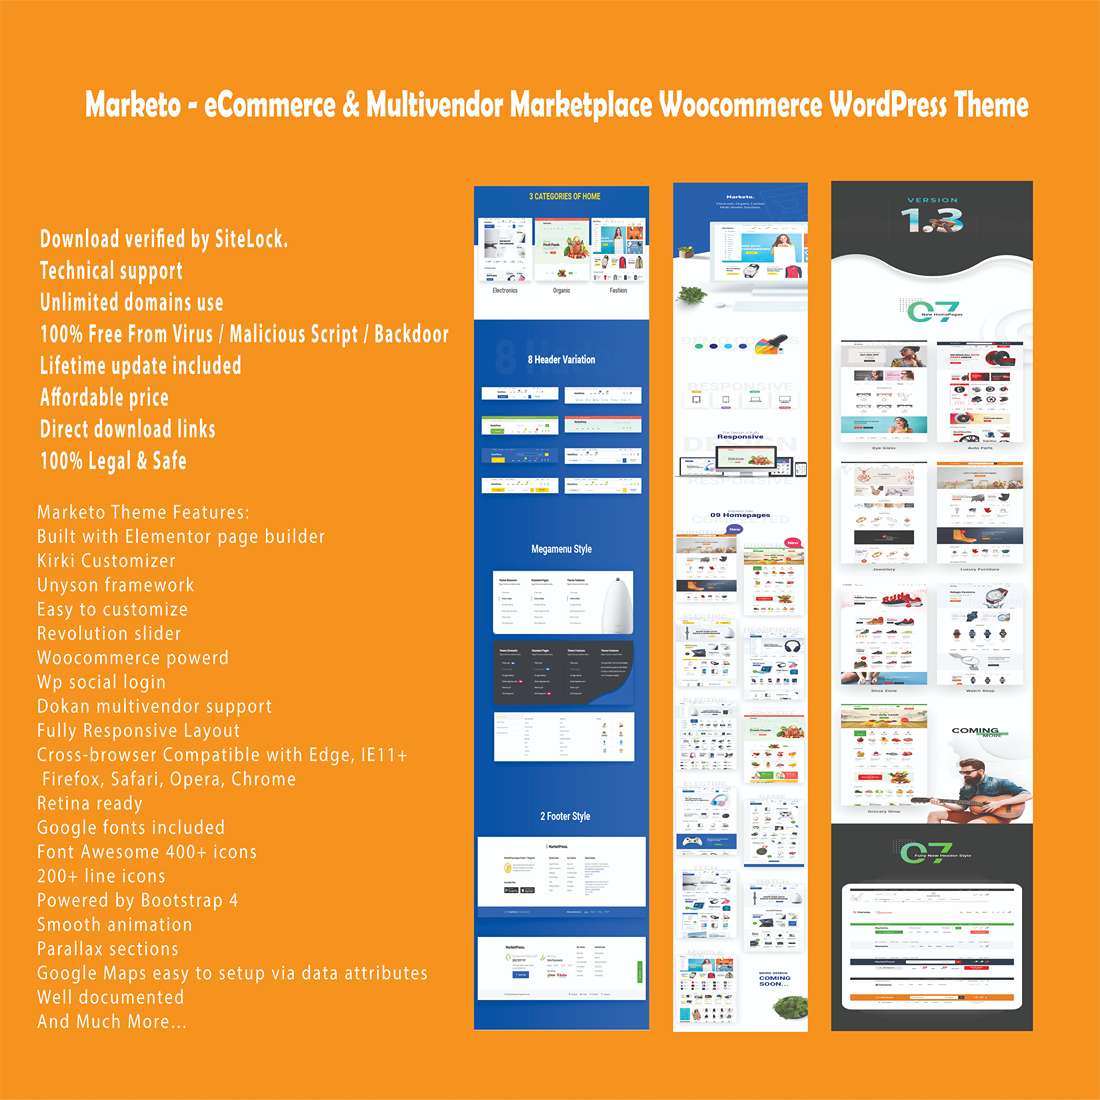 Marketo - eCommerce & Multivendor Marketplace Woo commerce WordPress Theme preview image.